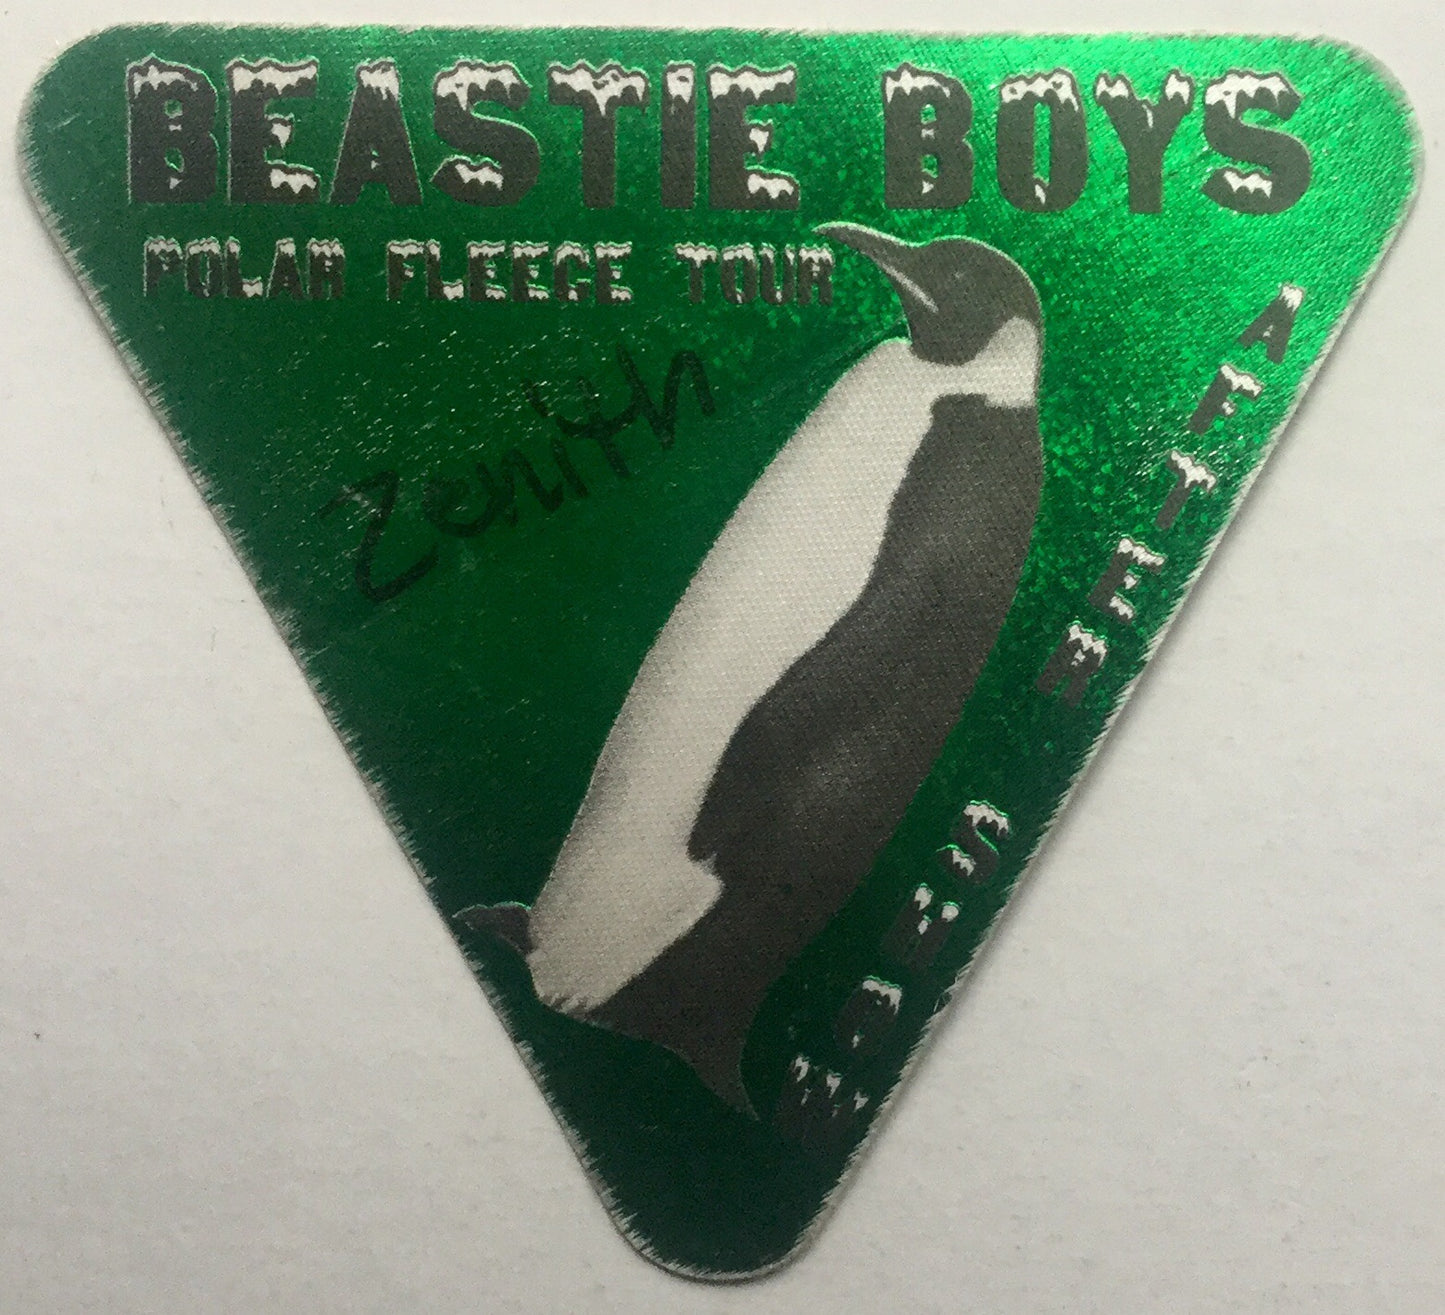 Beastie Boys Original Unused Concert Backstage Pass Ticket Le Zenith Paris 8th Feb 1995